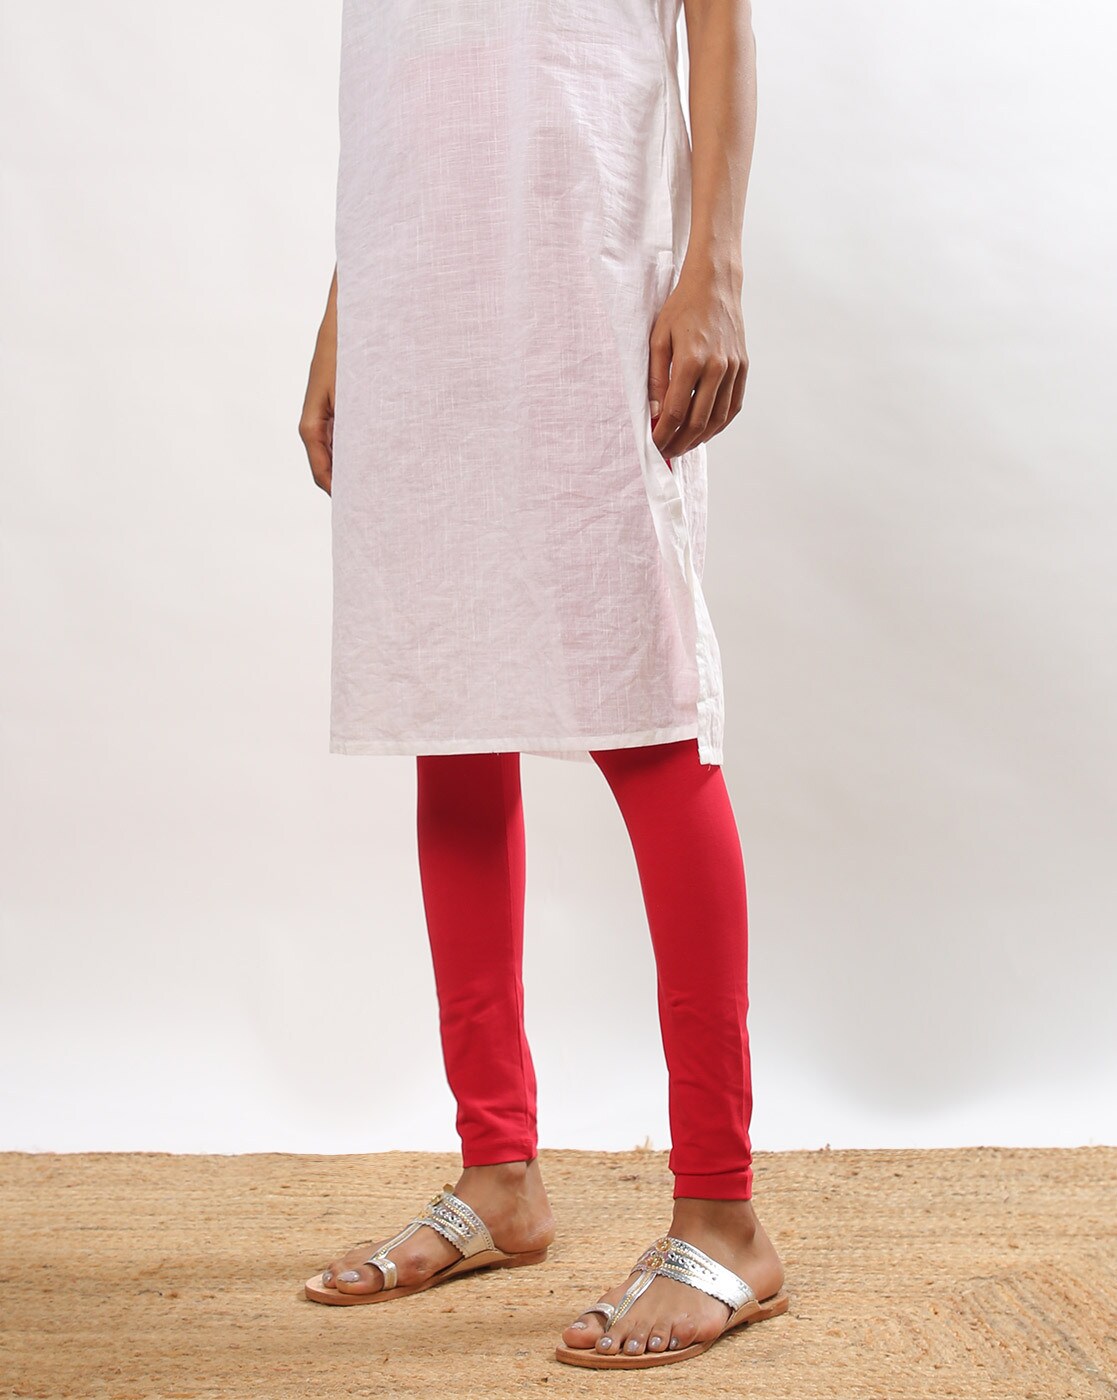 Buy Red Leggings for Women by Svrnaa Online